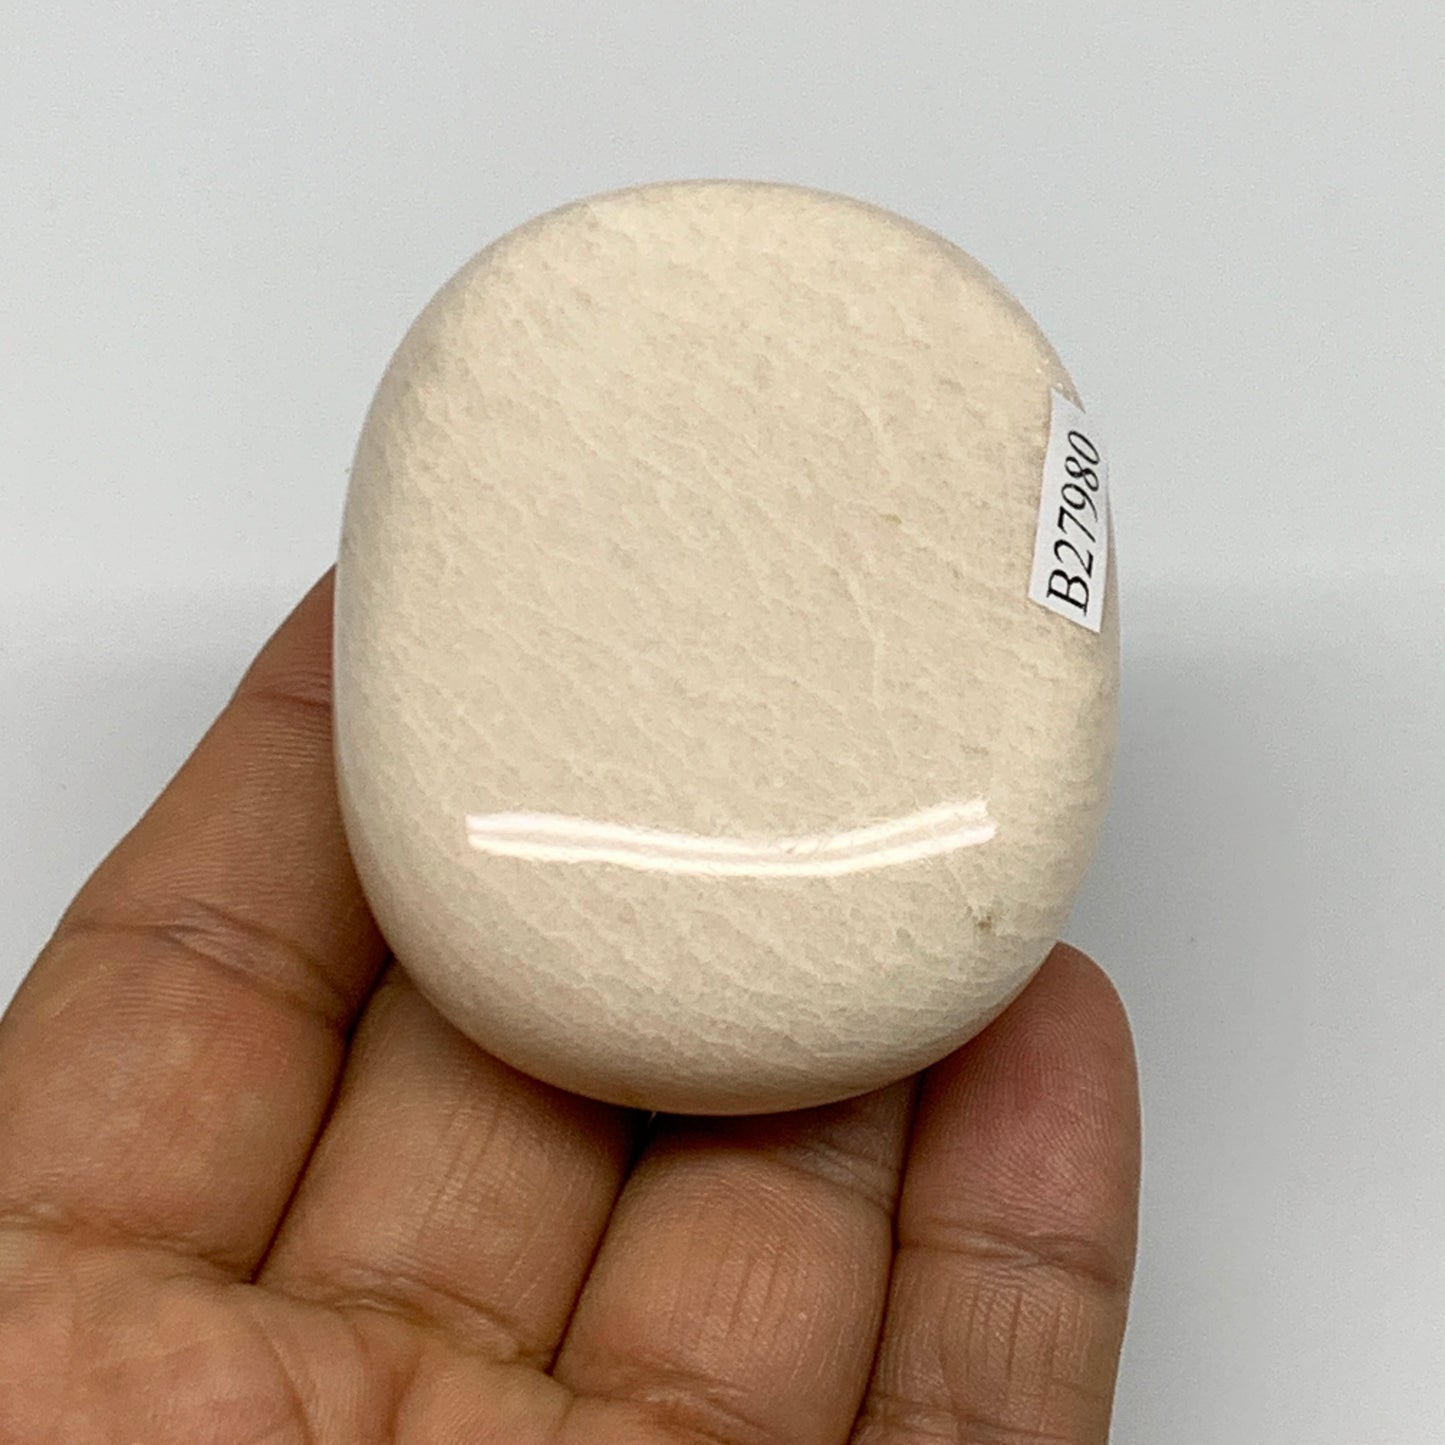 113.7g,2.4"x1.9"x0.9" Peach Moonstone Crystal Palm-Stone Polished Reiki, B27980